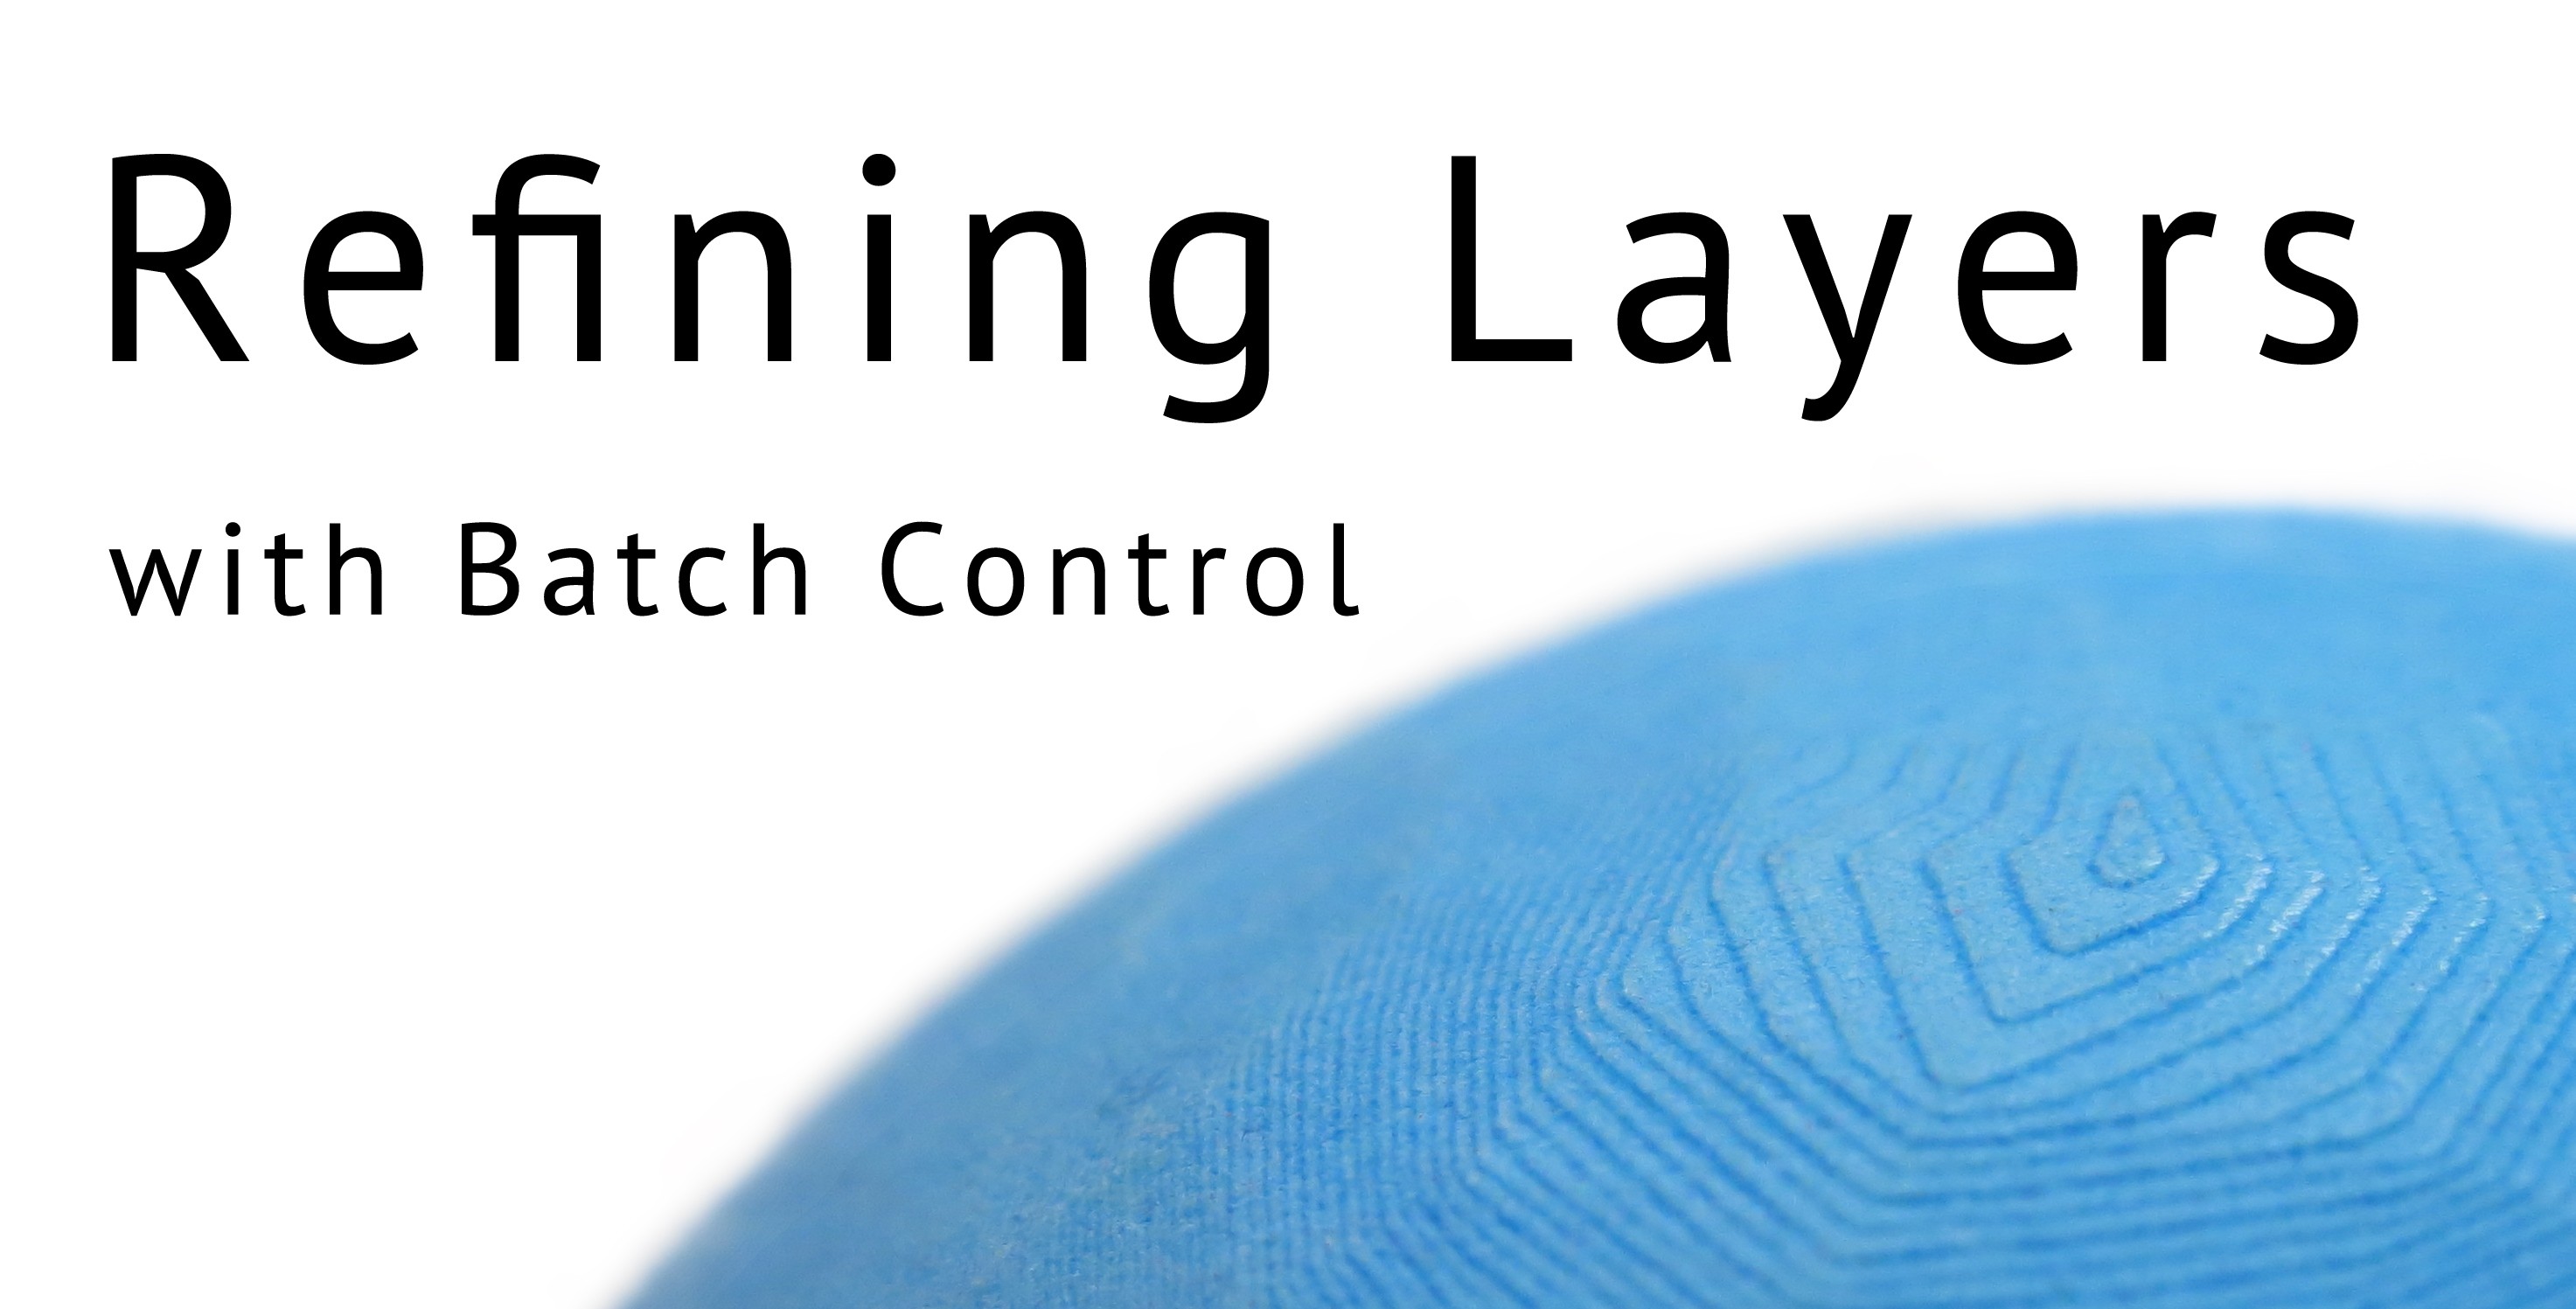 Refine layers using Batch Control | Sculpteo Blog